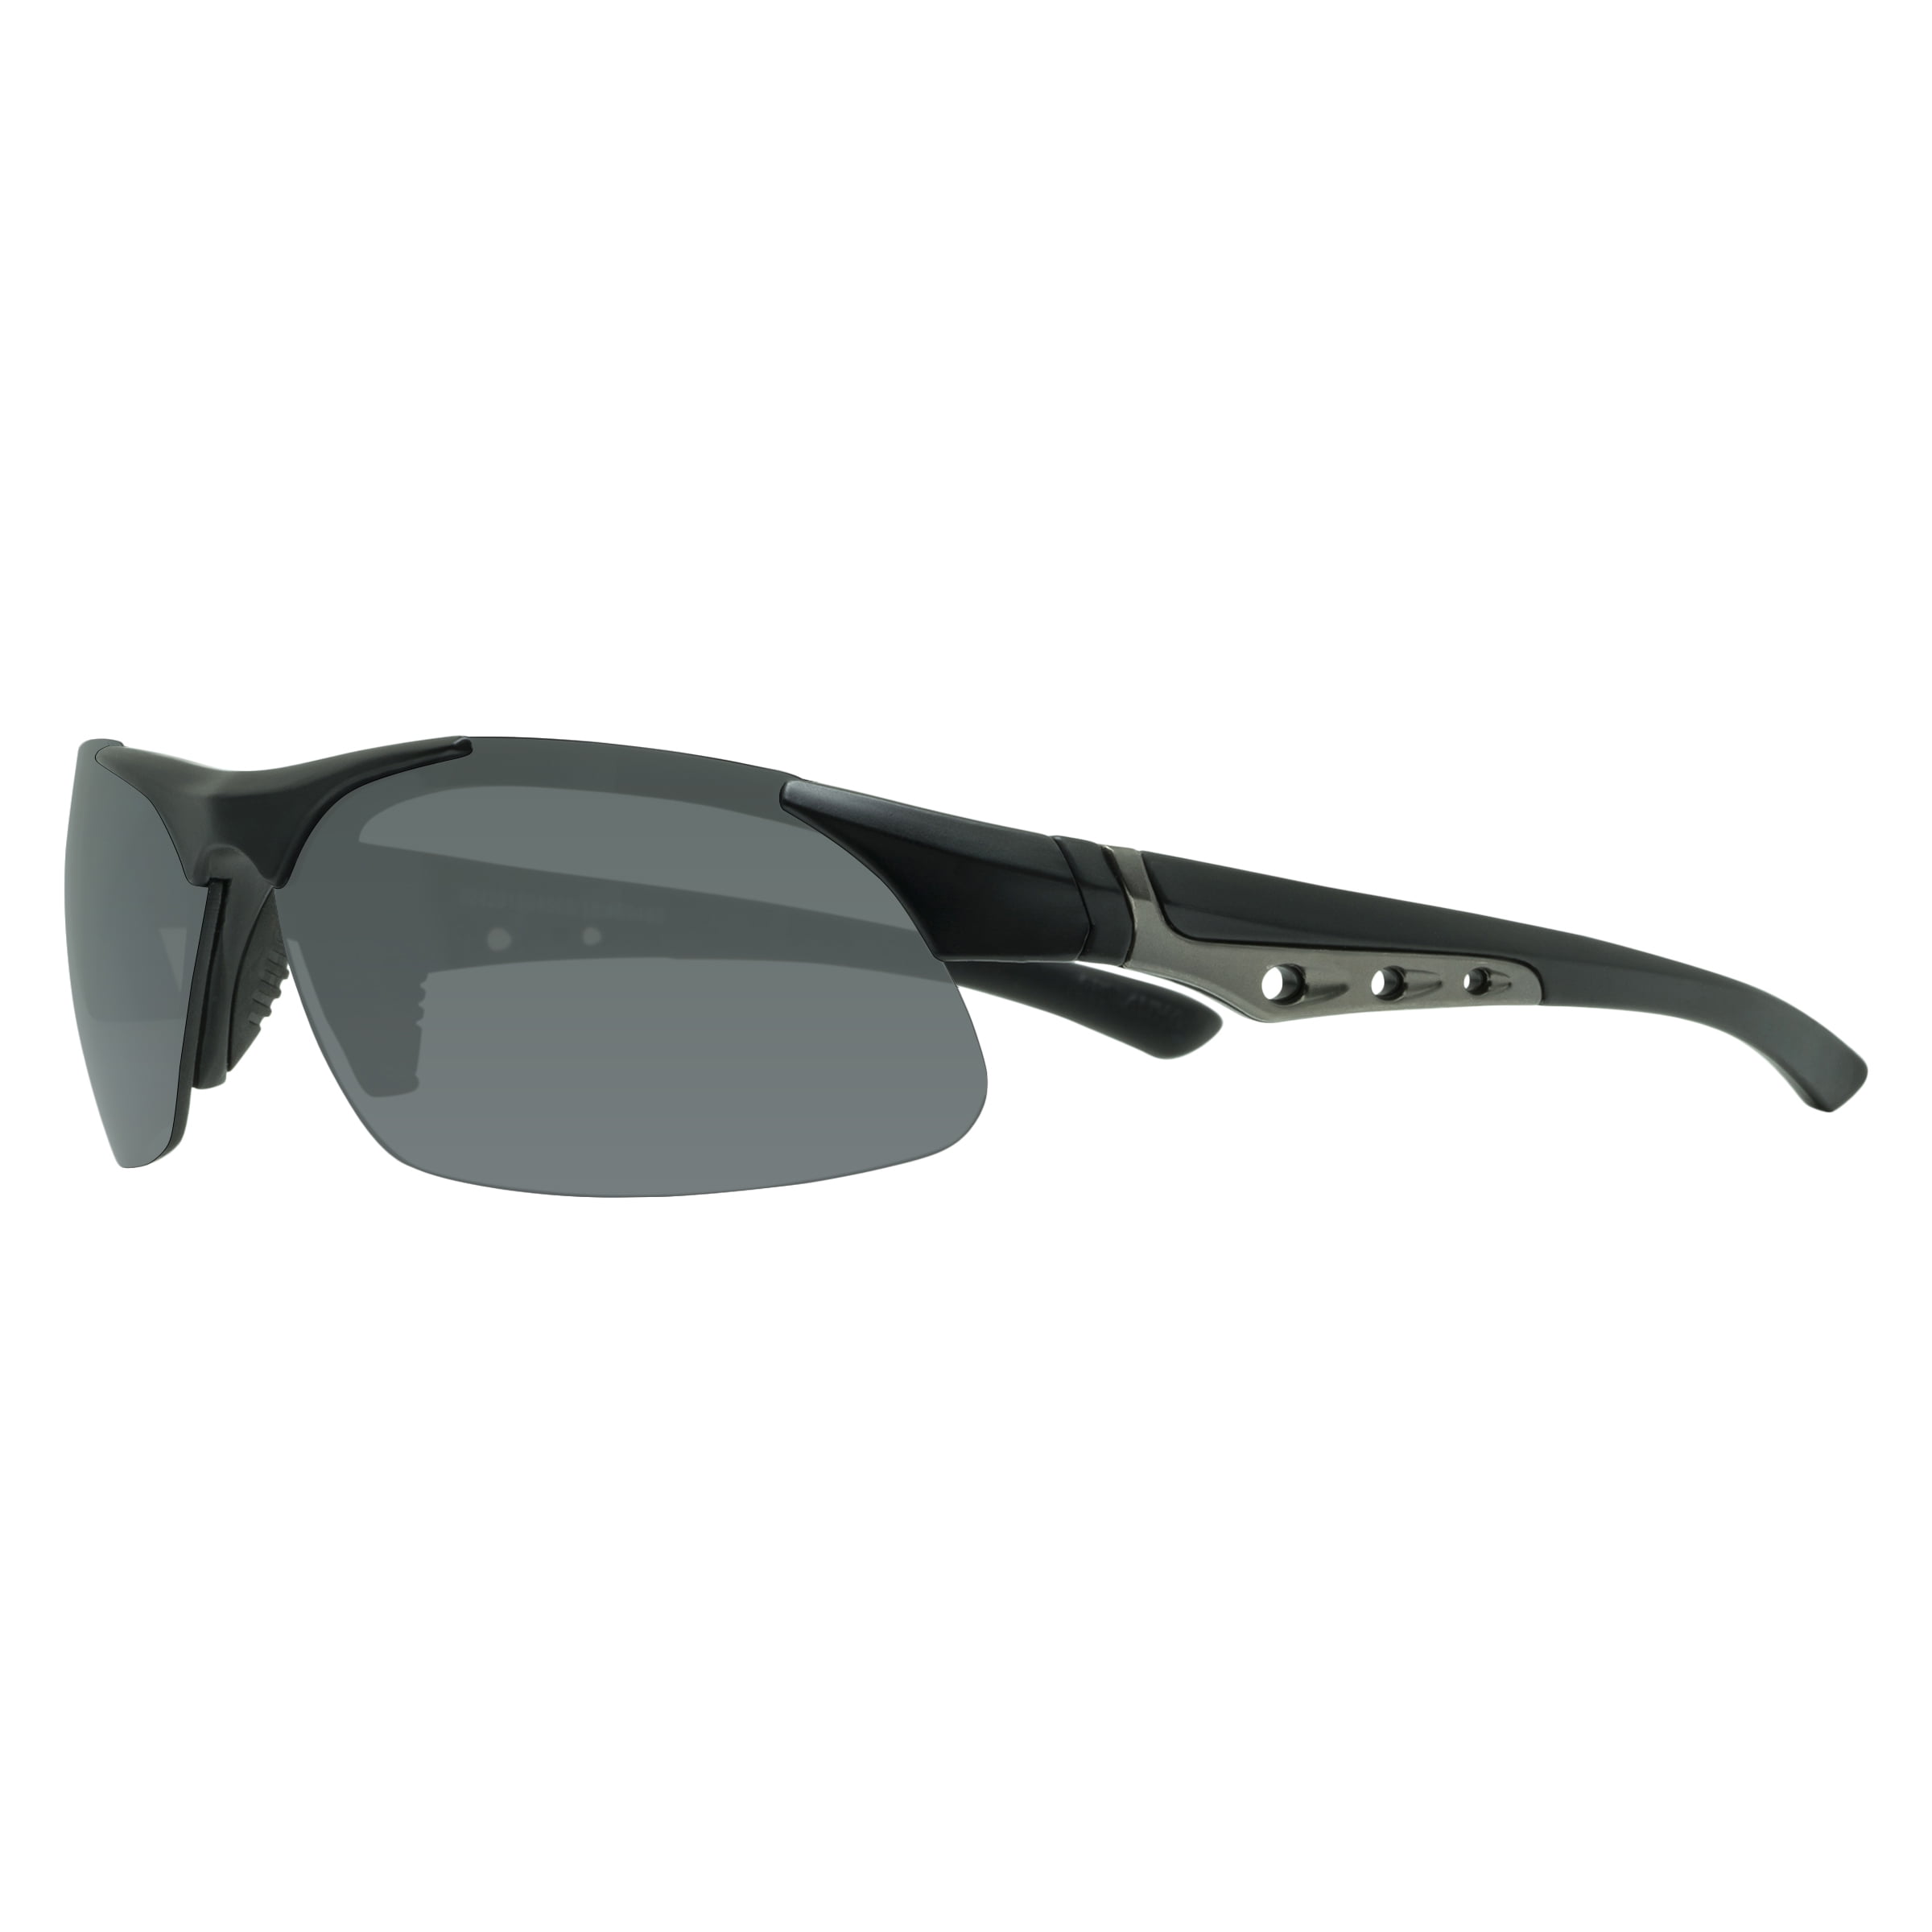 Piranha Eyewear Encore Half Frame Sport Sunglasses for Men with